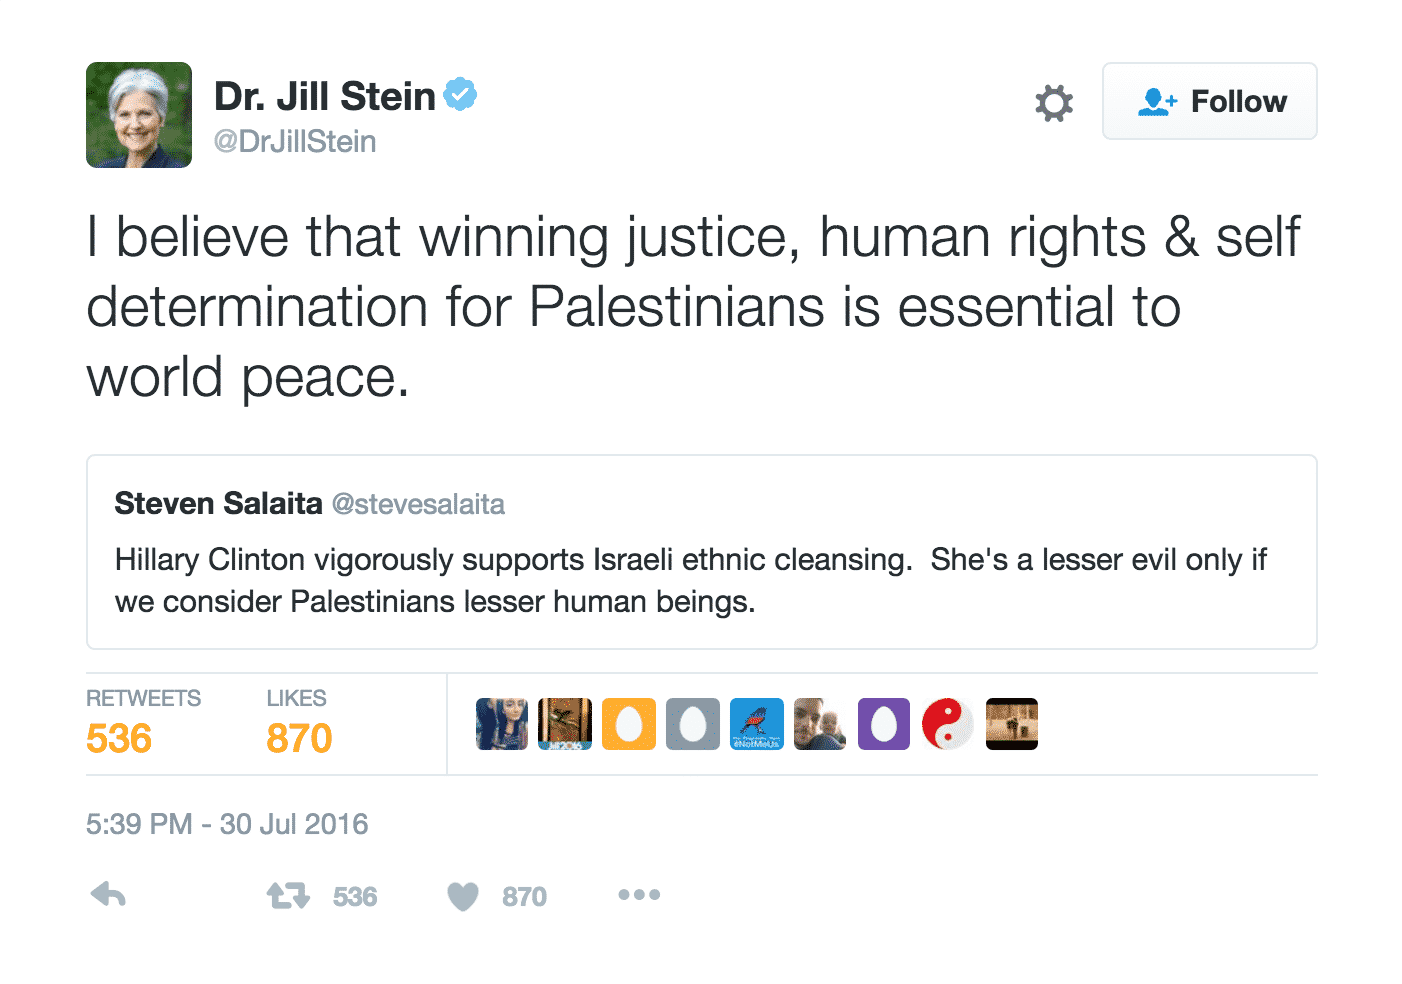 Jill Stein RTs Steven Salaita